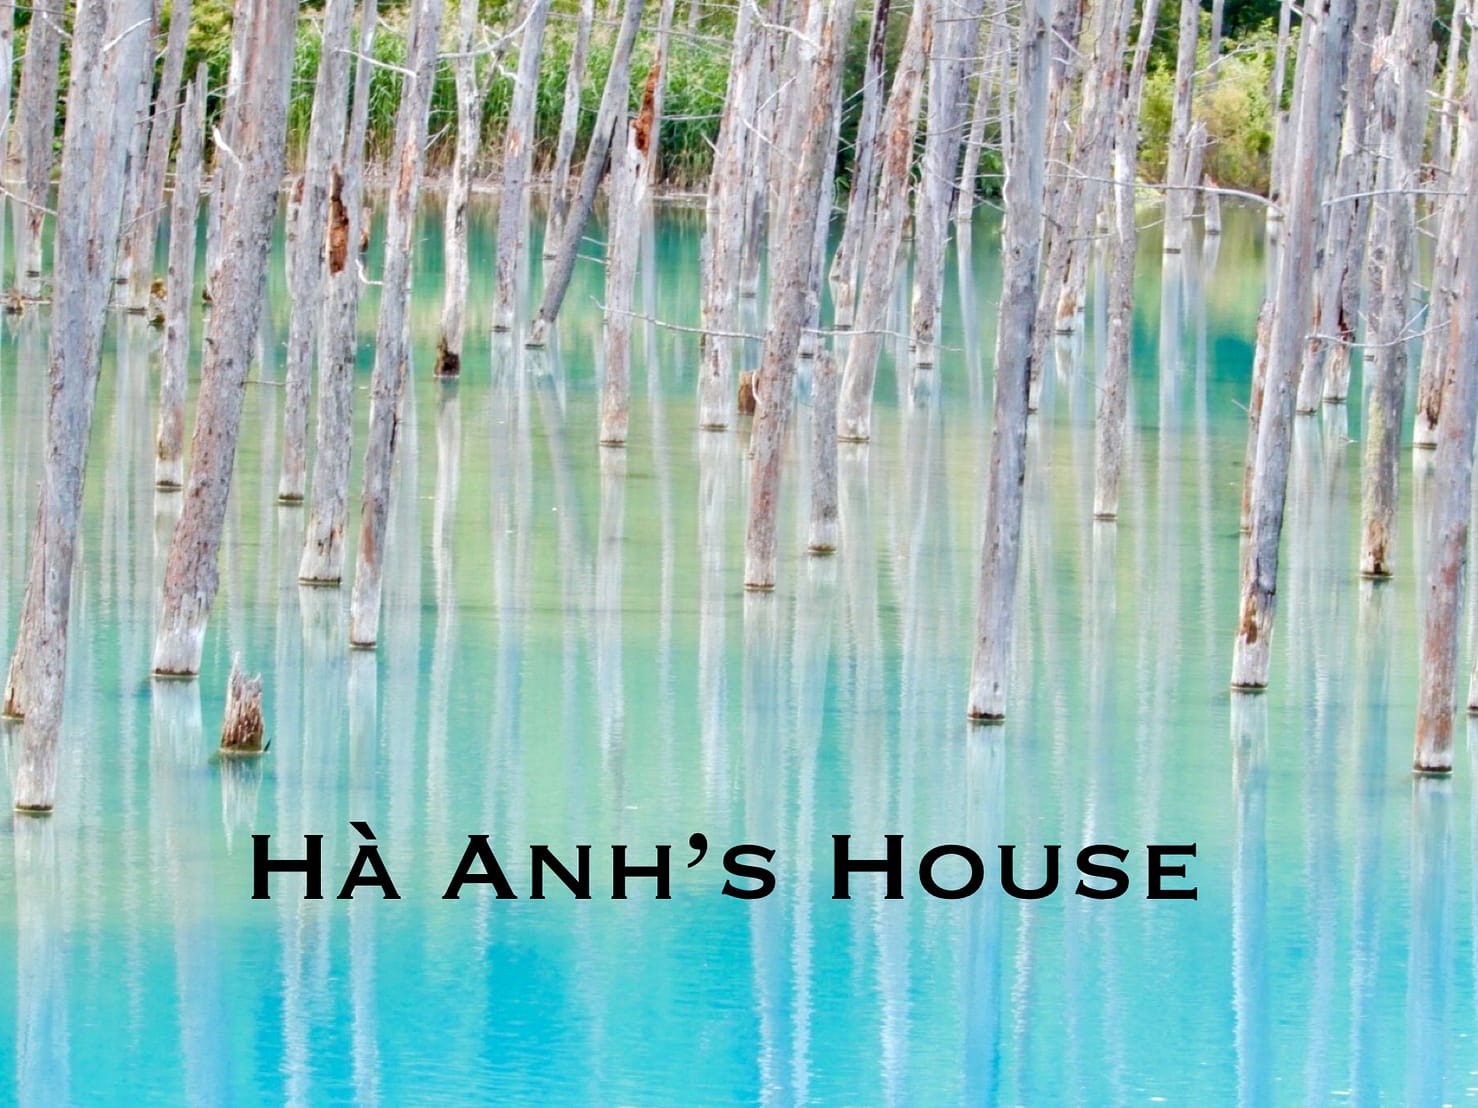 Hà Anh's House